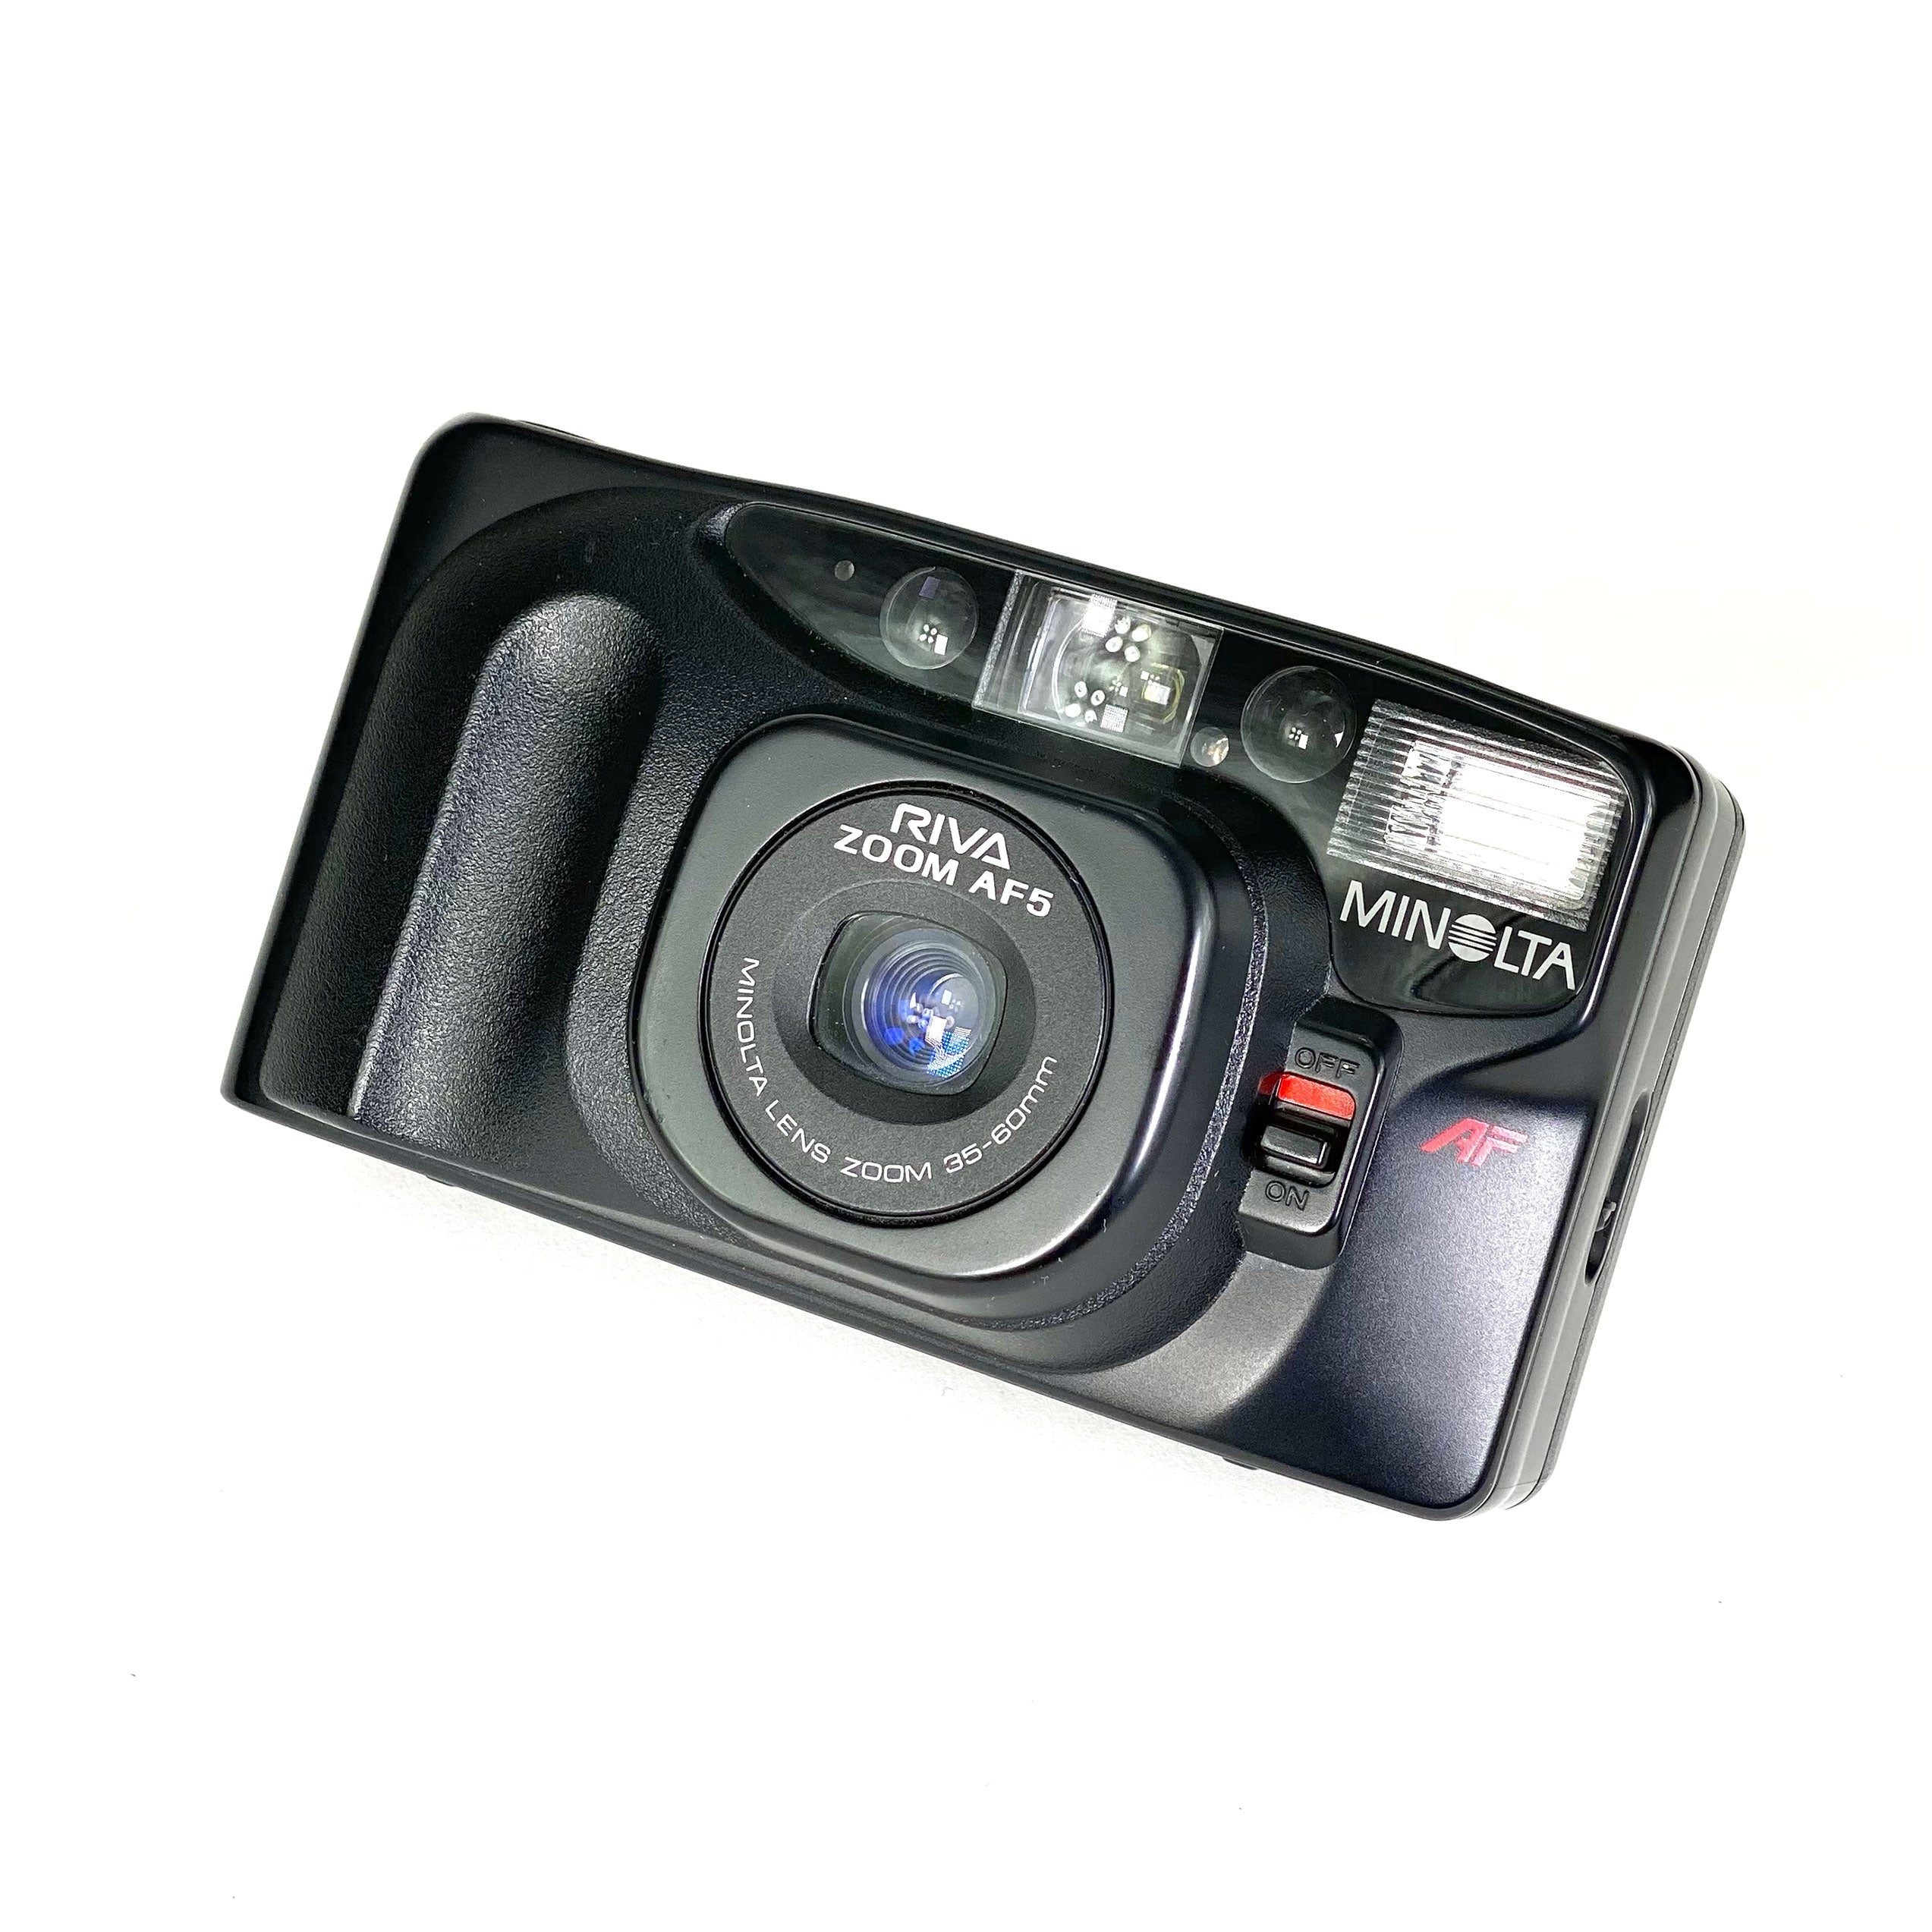 Minolta Riva Zoom AF5 – Retro Camera Shop